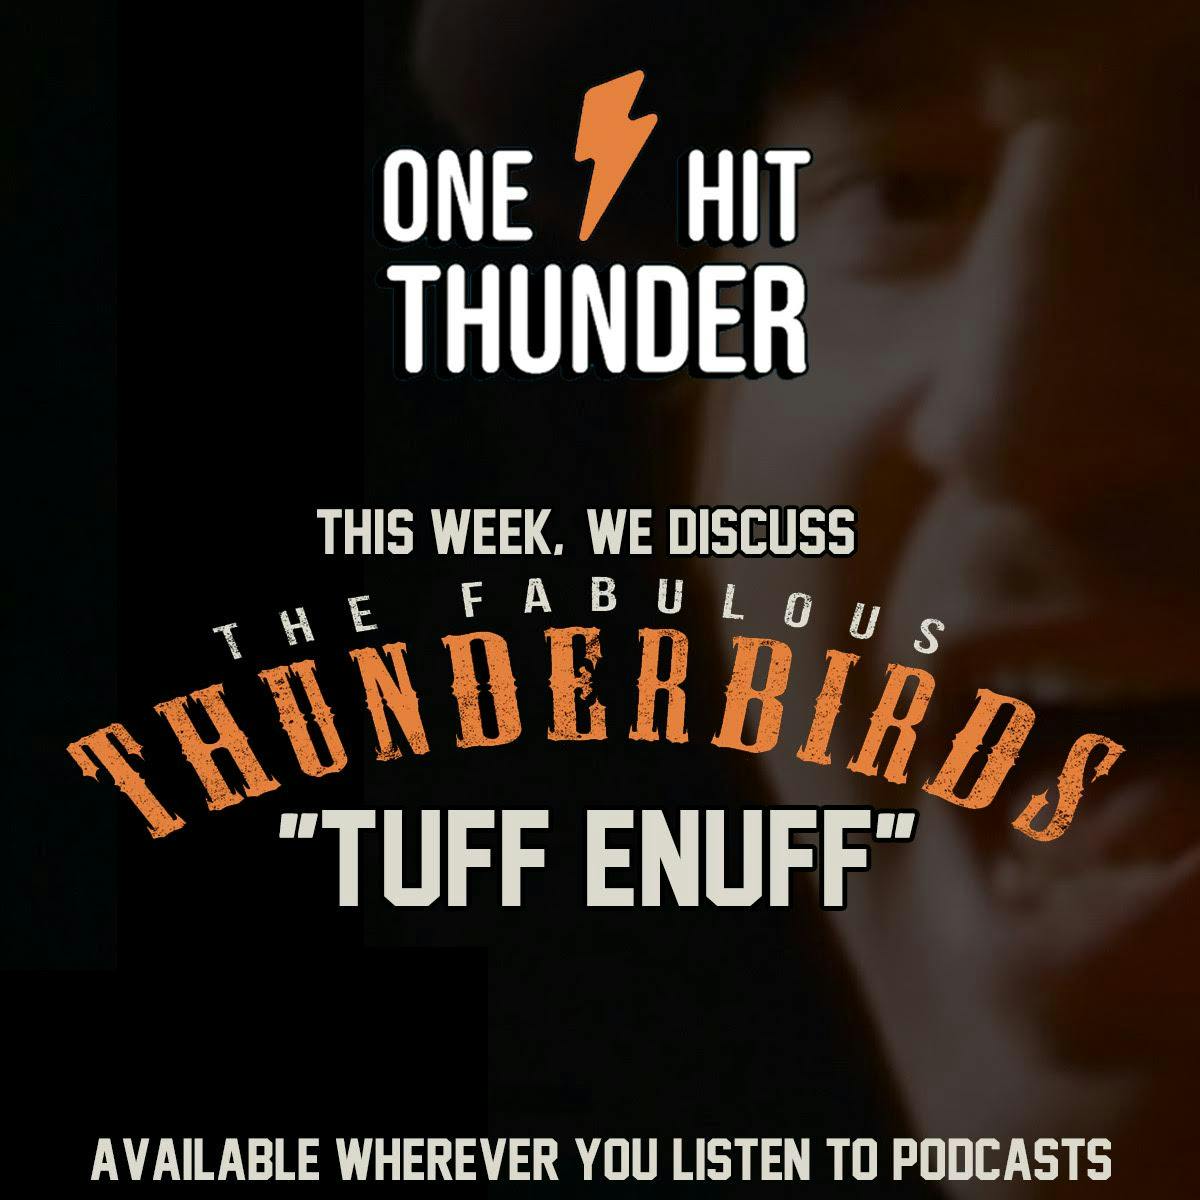 ”Tuff Enuff” by The Fabulous Thunderbirds